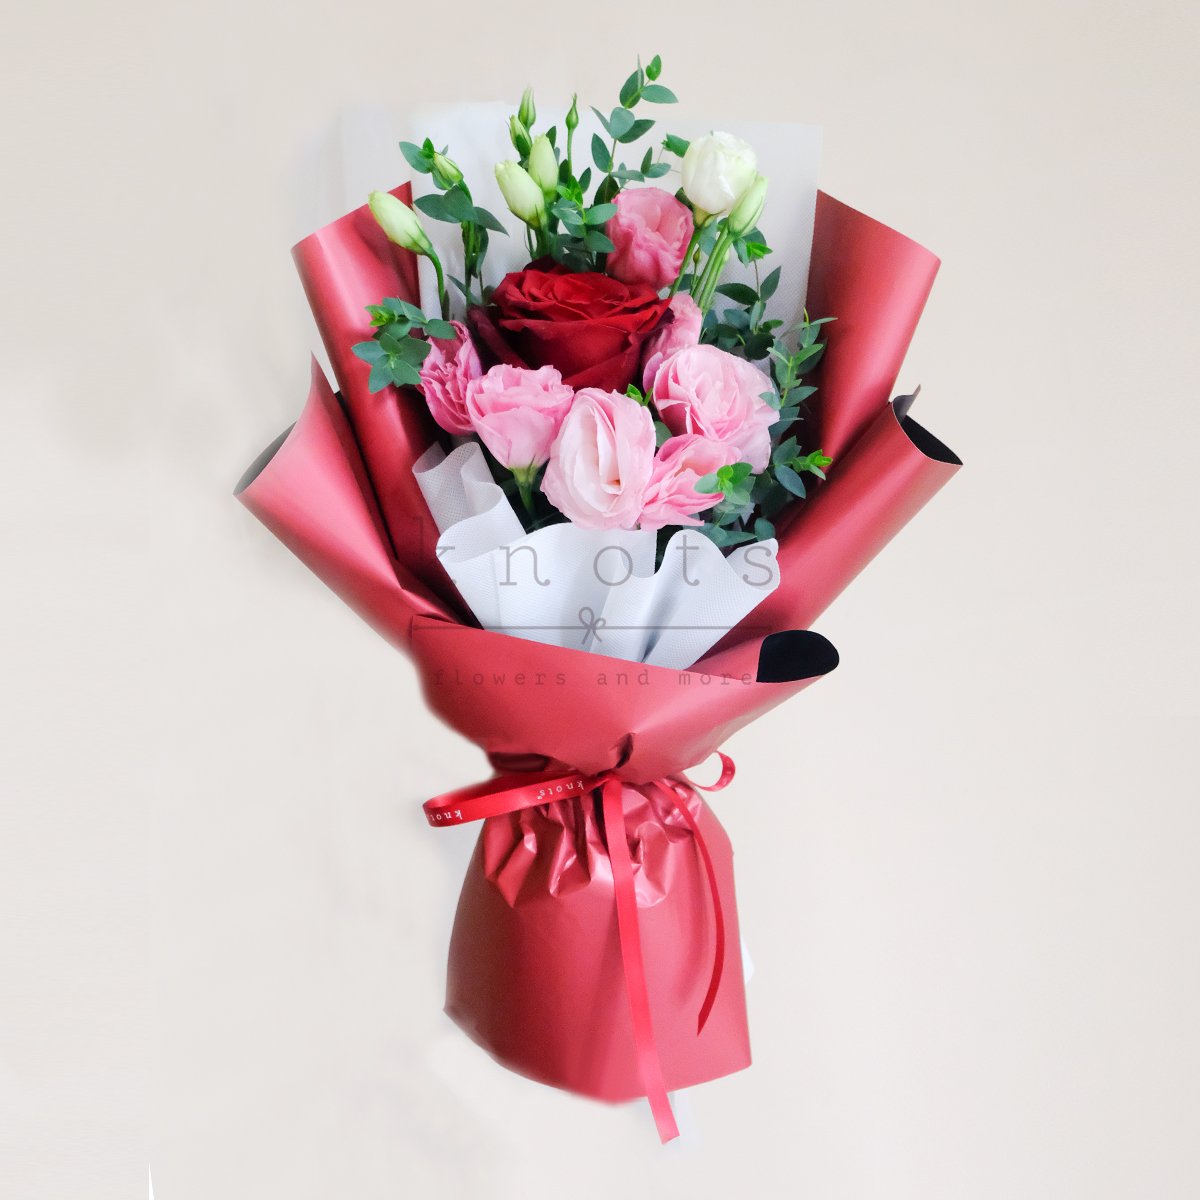 Never Apart (Red Ecuadorian Roses Bouquet)